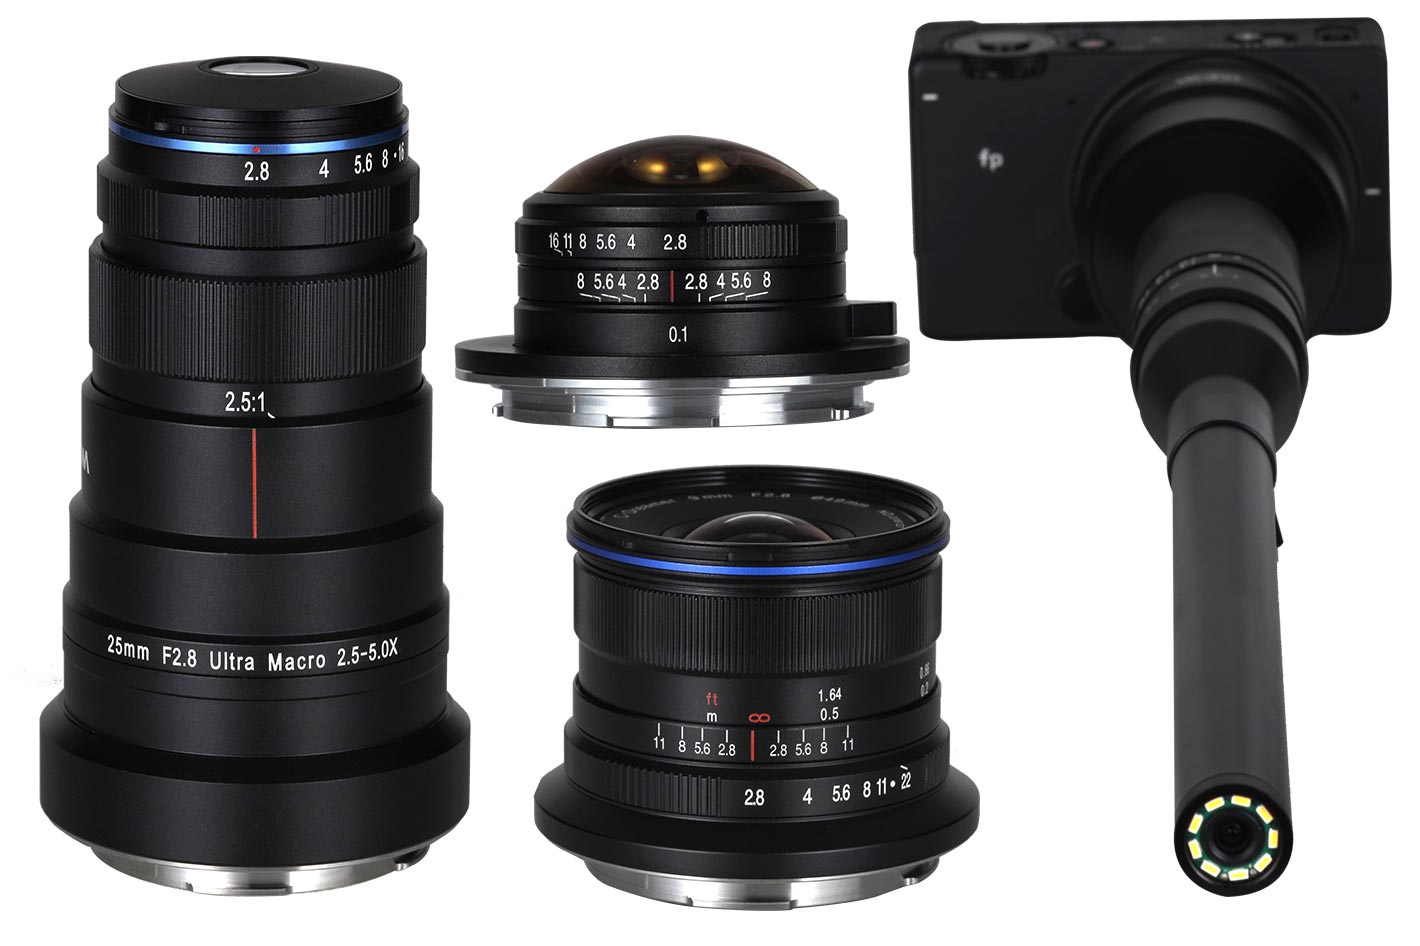  Venus Optics announces 4 new L mount lenses